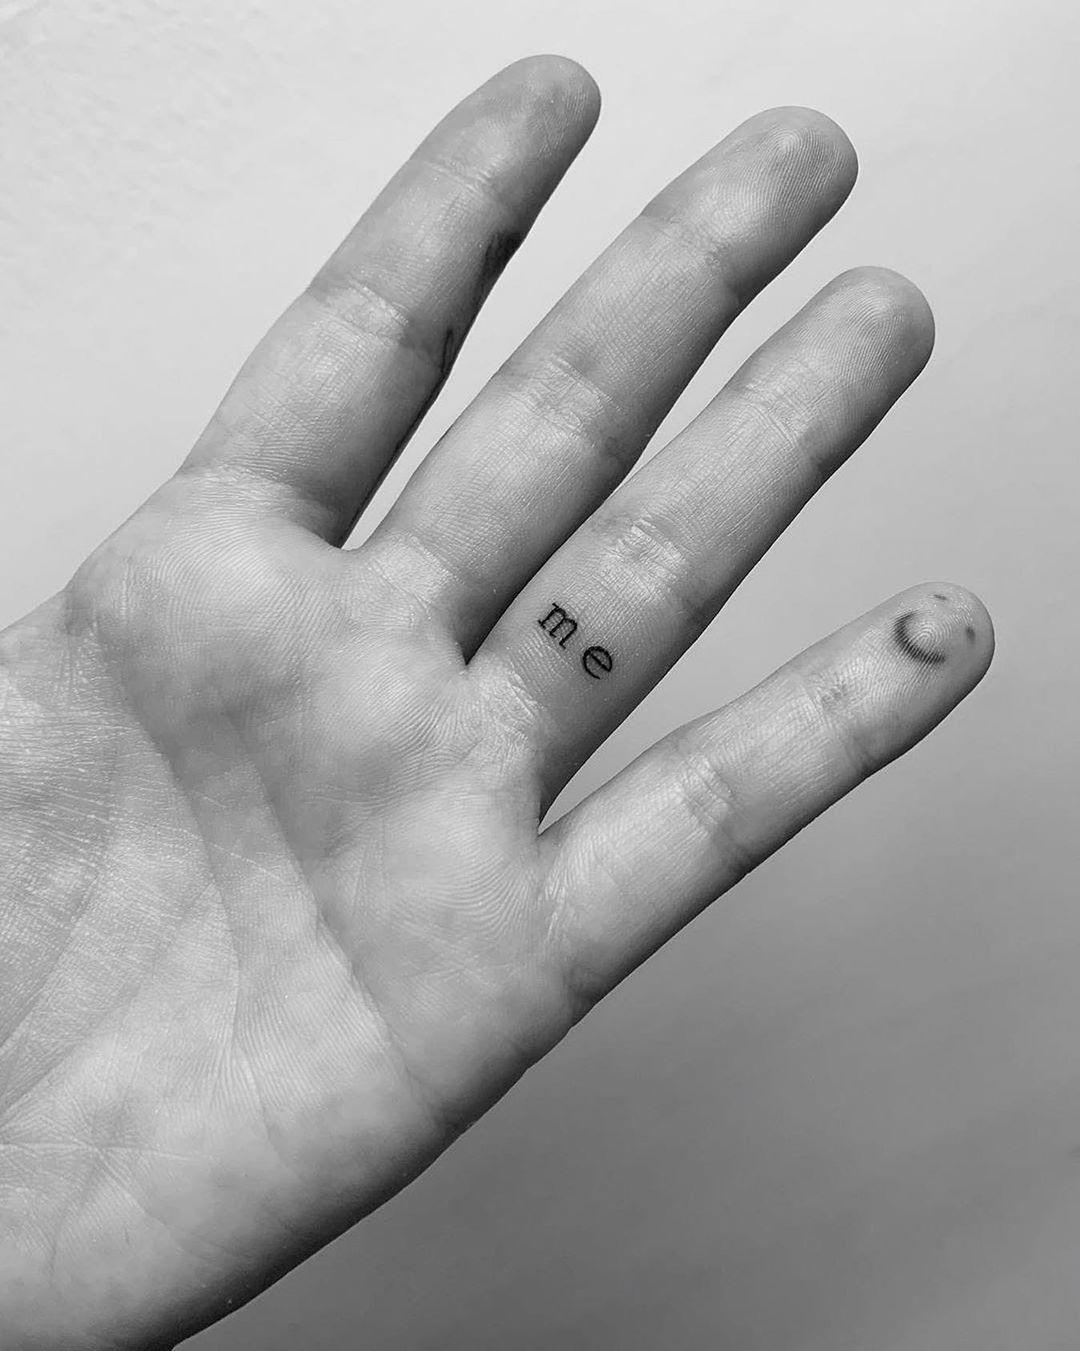 La palabra ‘me’ tatuada en la cara interna del dedo